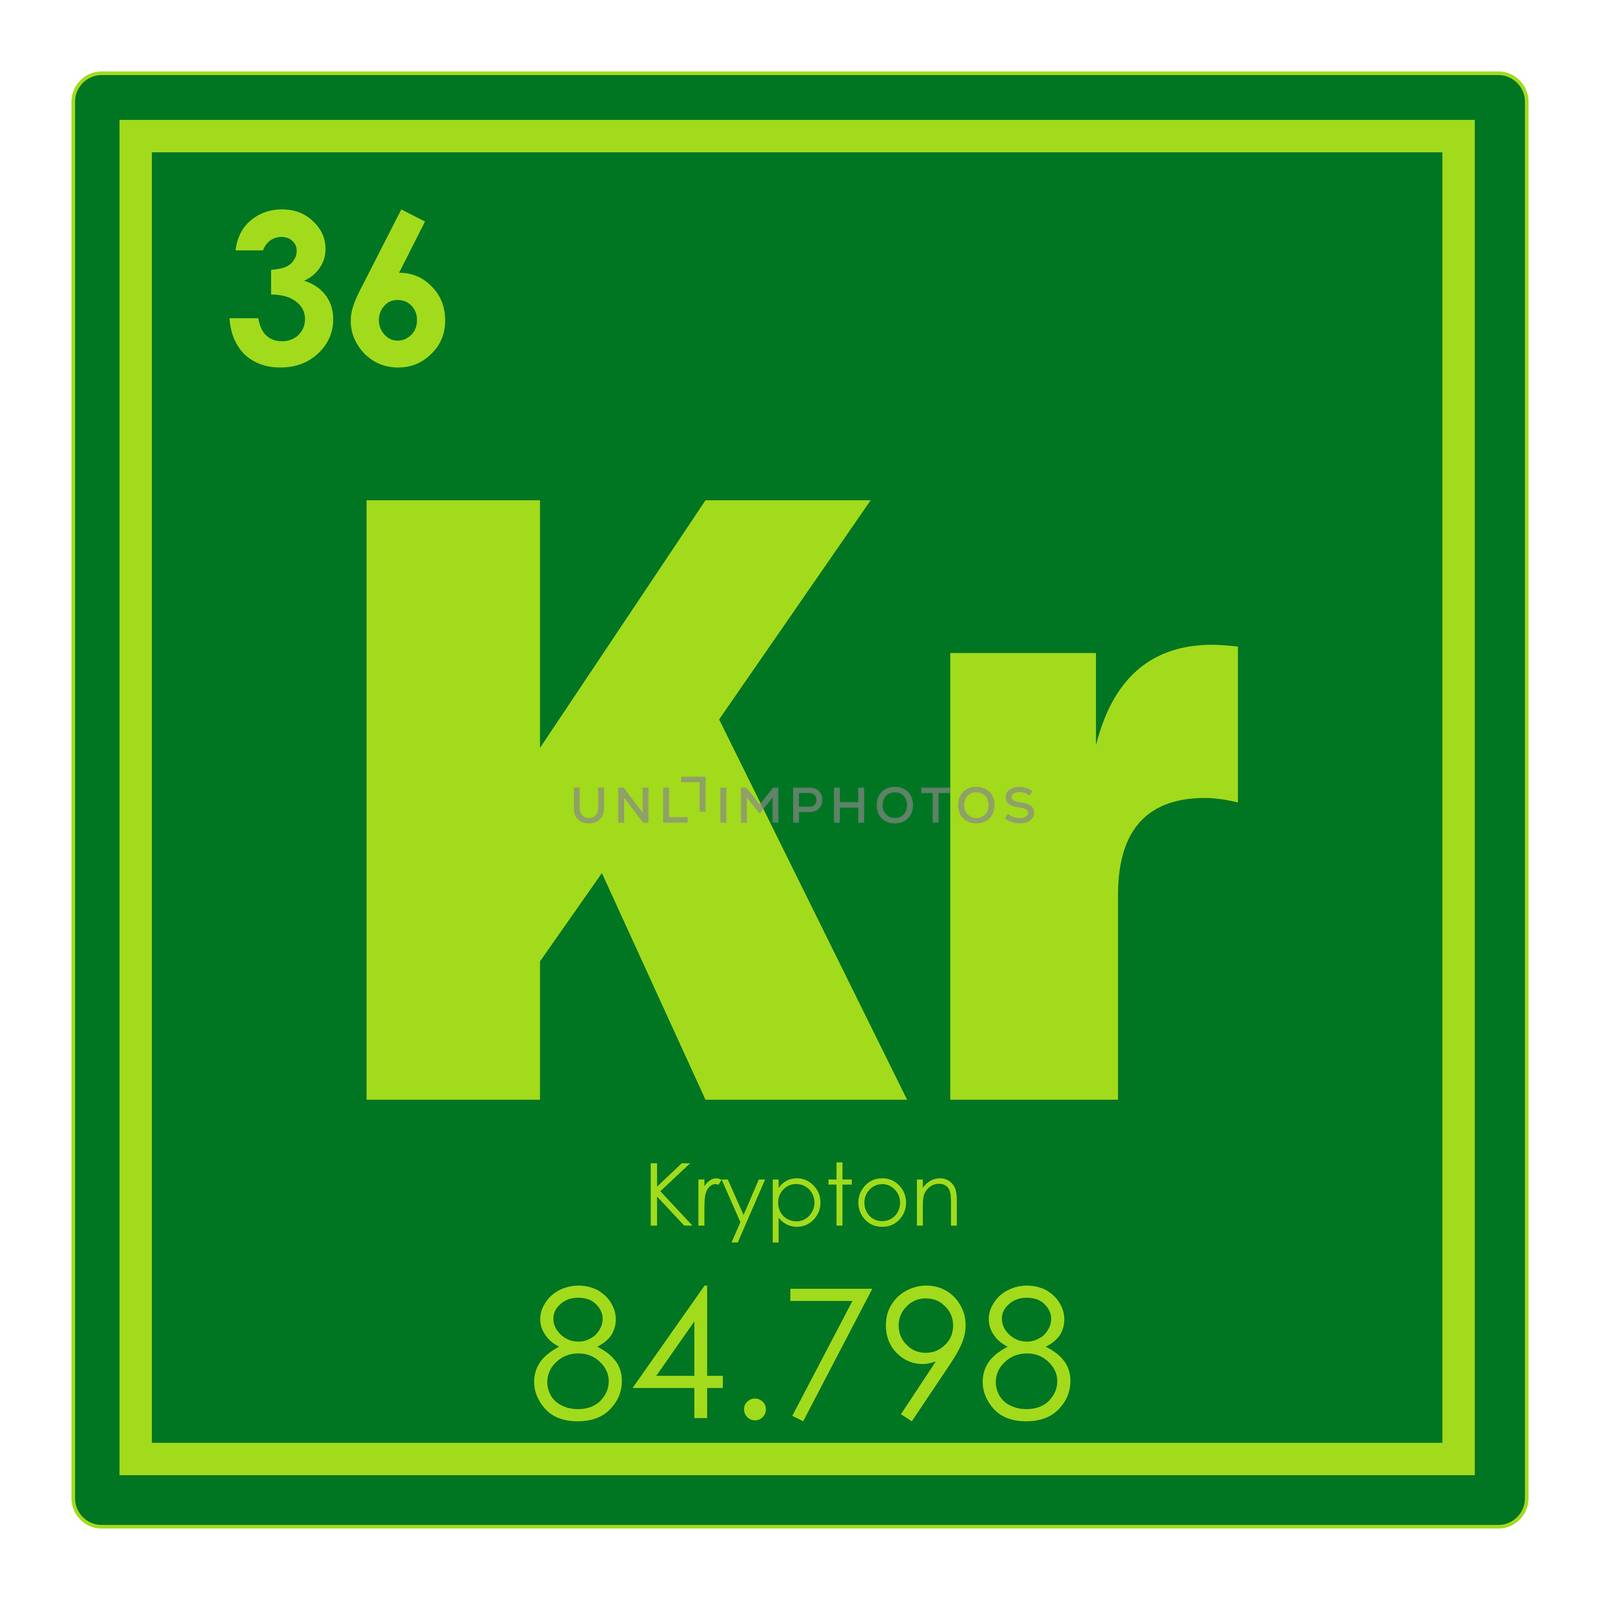 Krypton chemical element by tony4urban